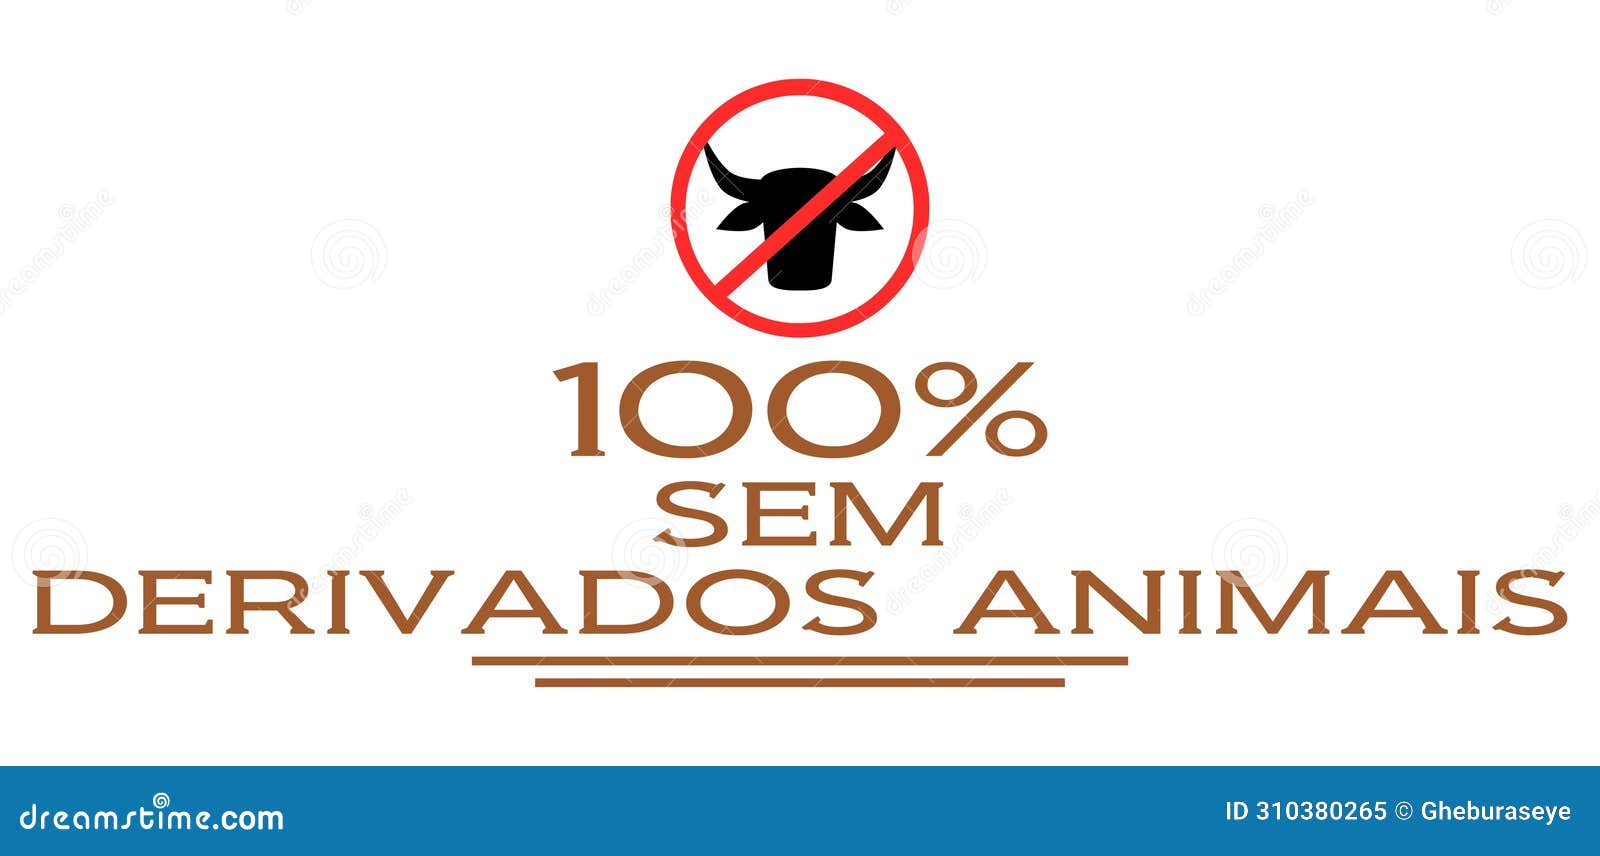 100% without animal derivatives, nutrition, veg, portuguese, .